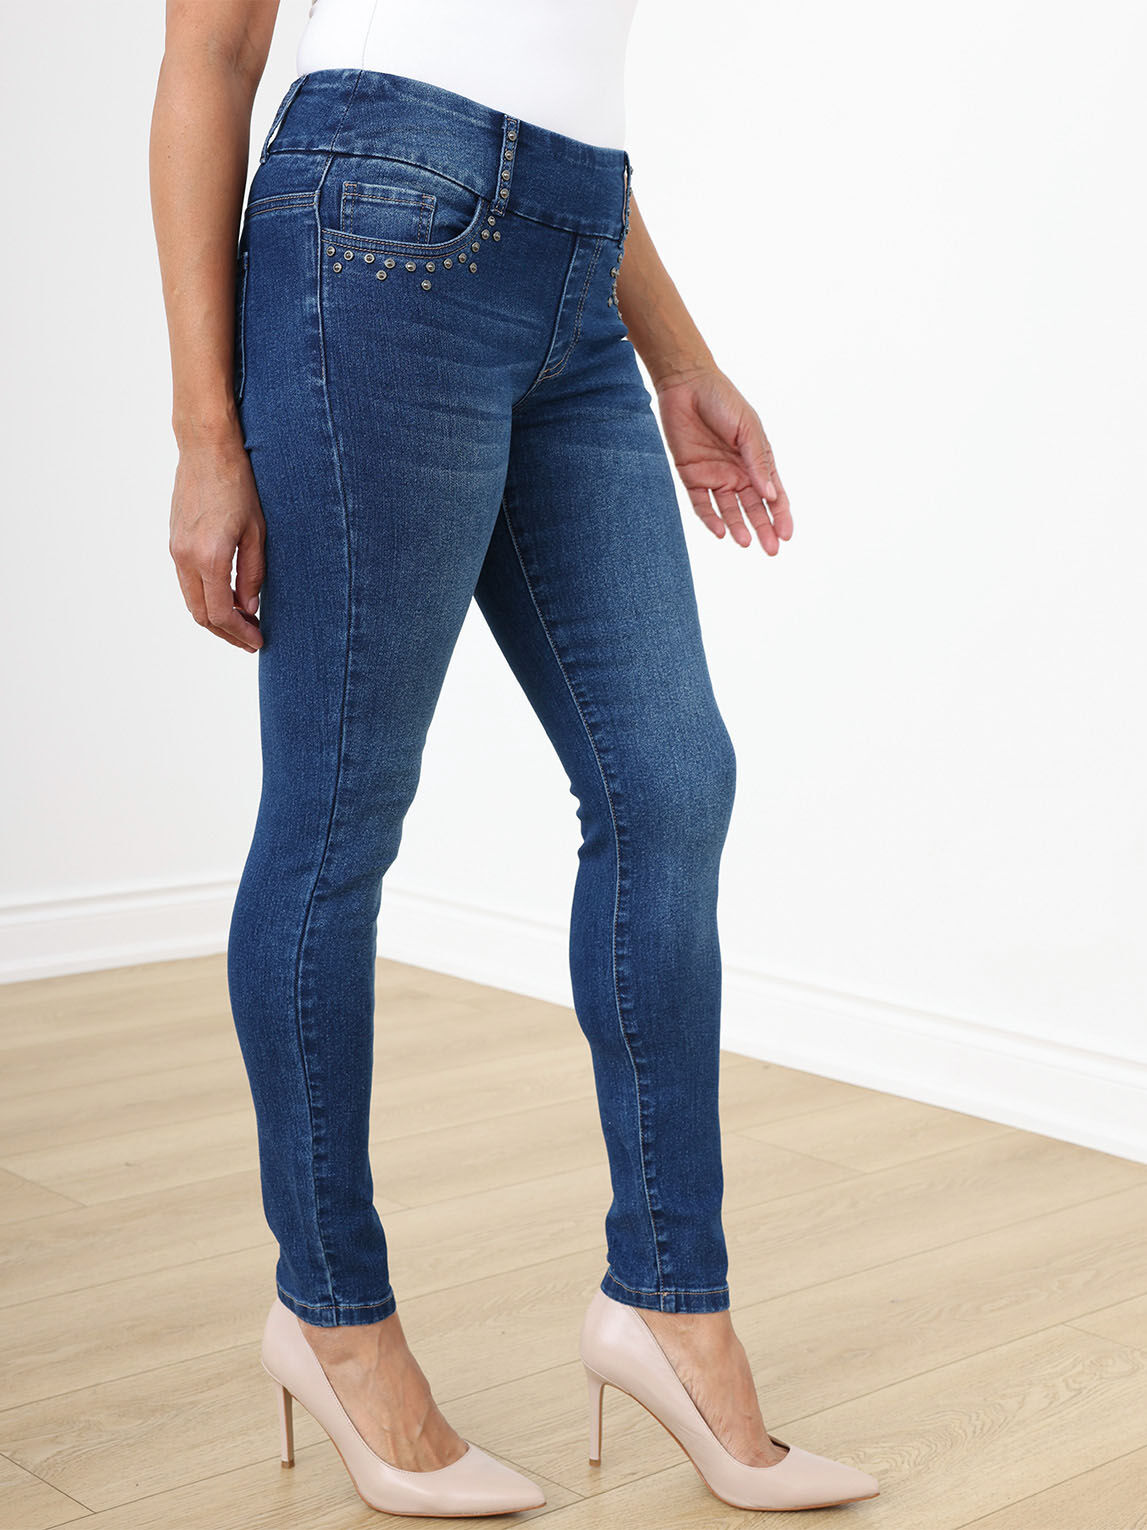 Medium Wash Slim Leg Jeans with Studs by GG